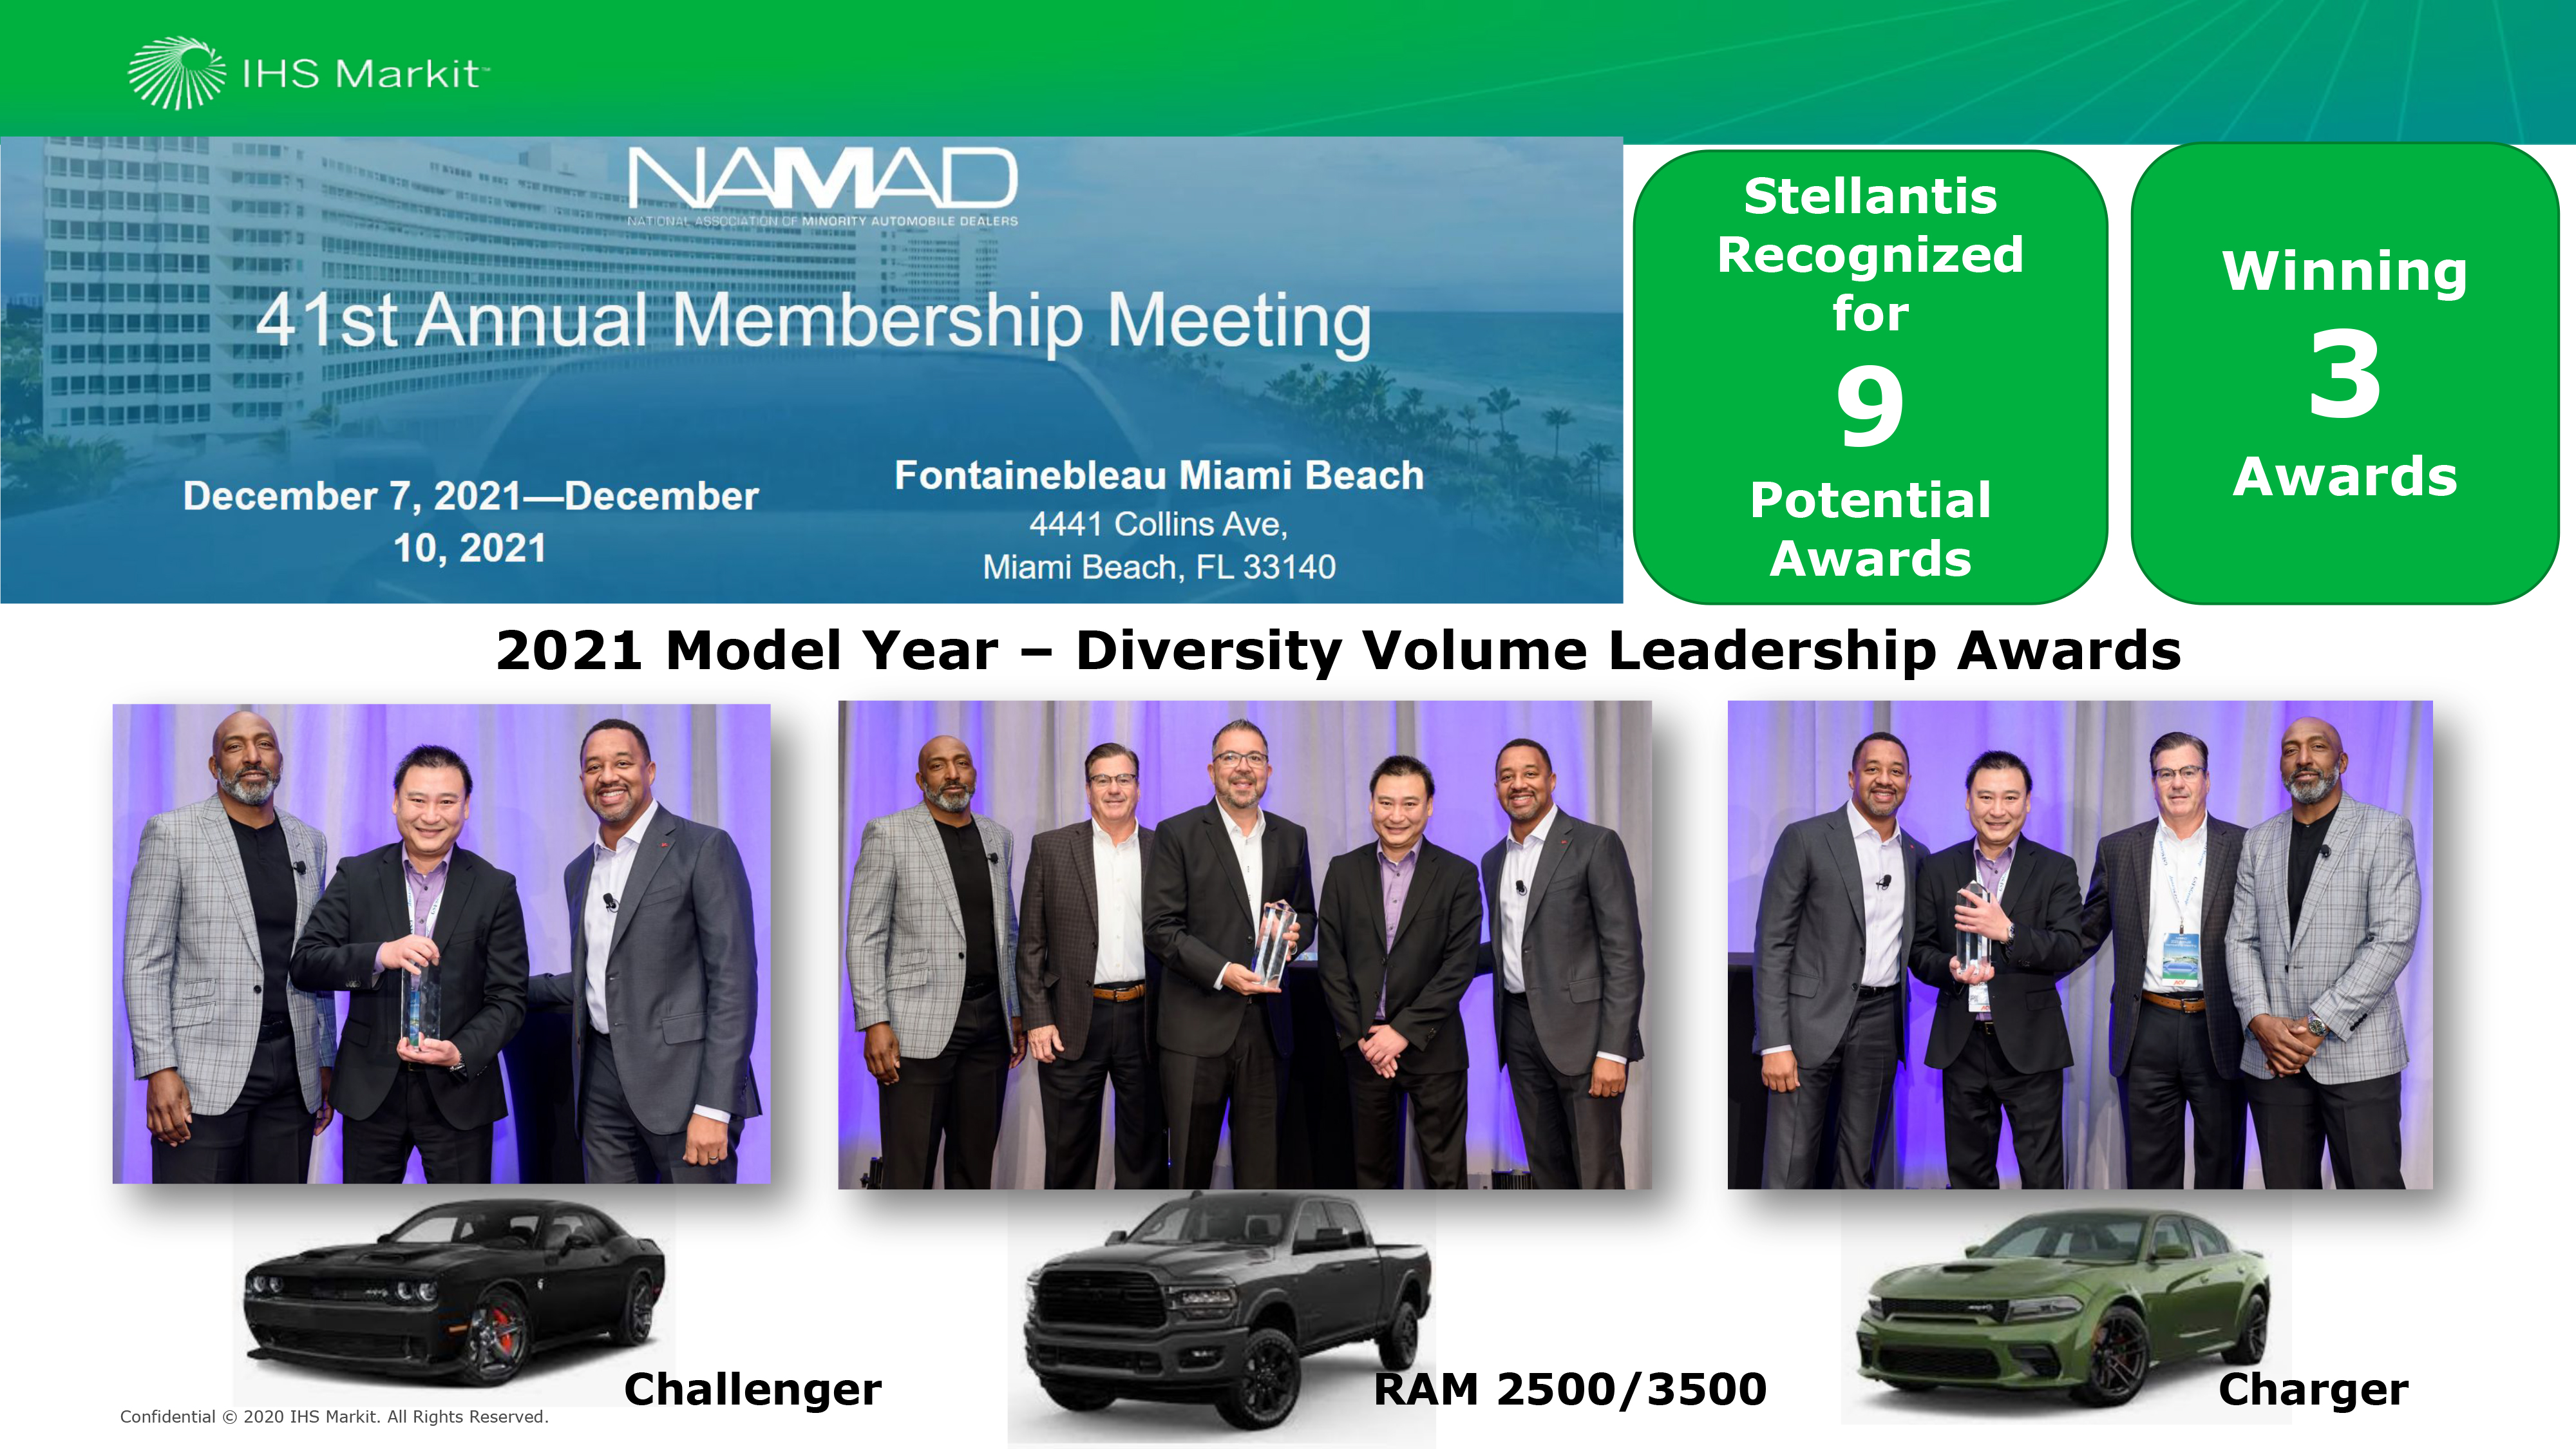 2021 Model Year - Diversity Volume Leadership Awards Image